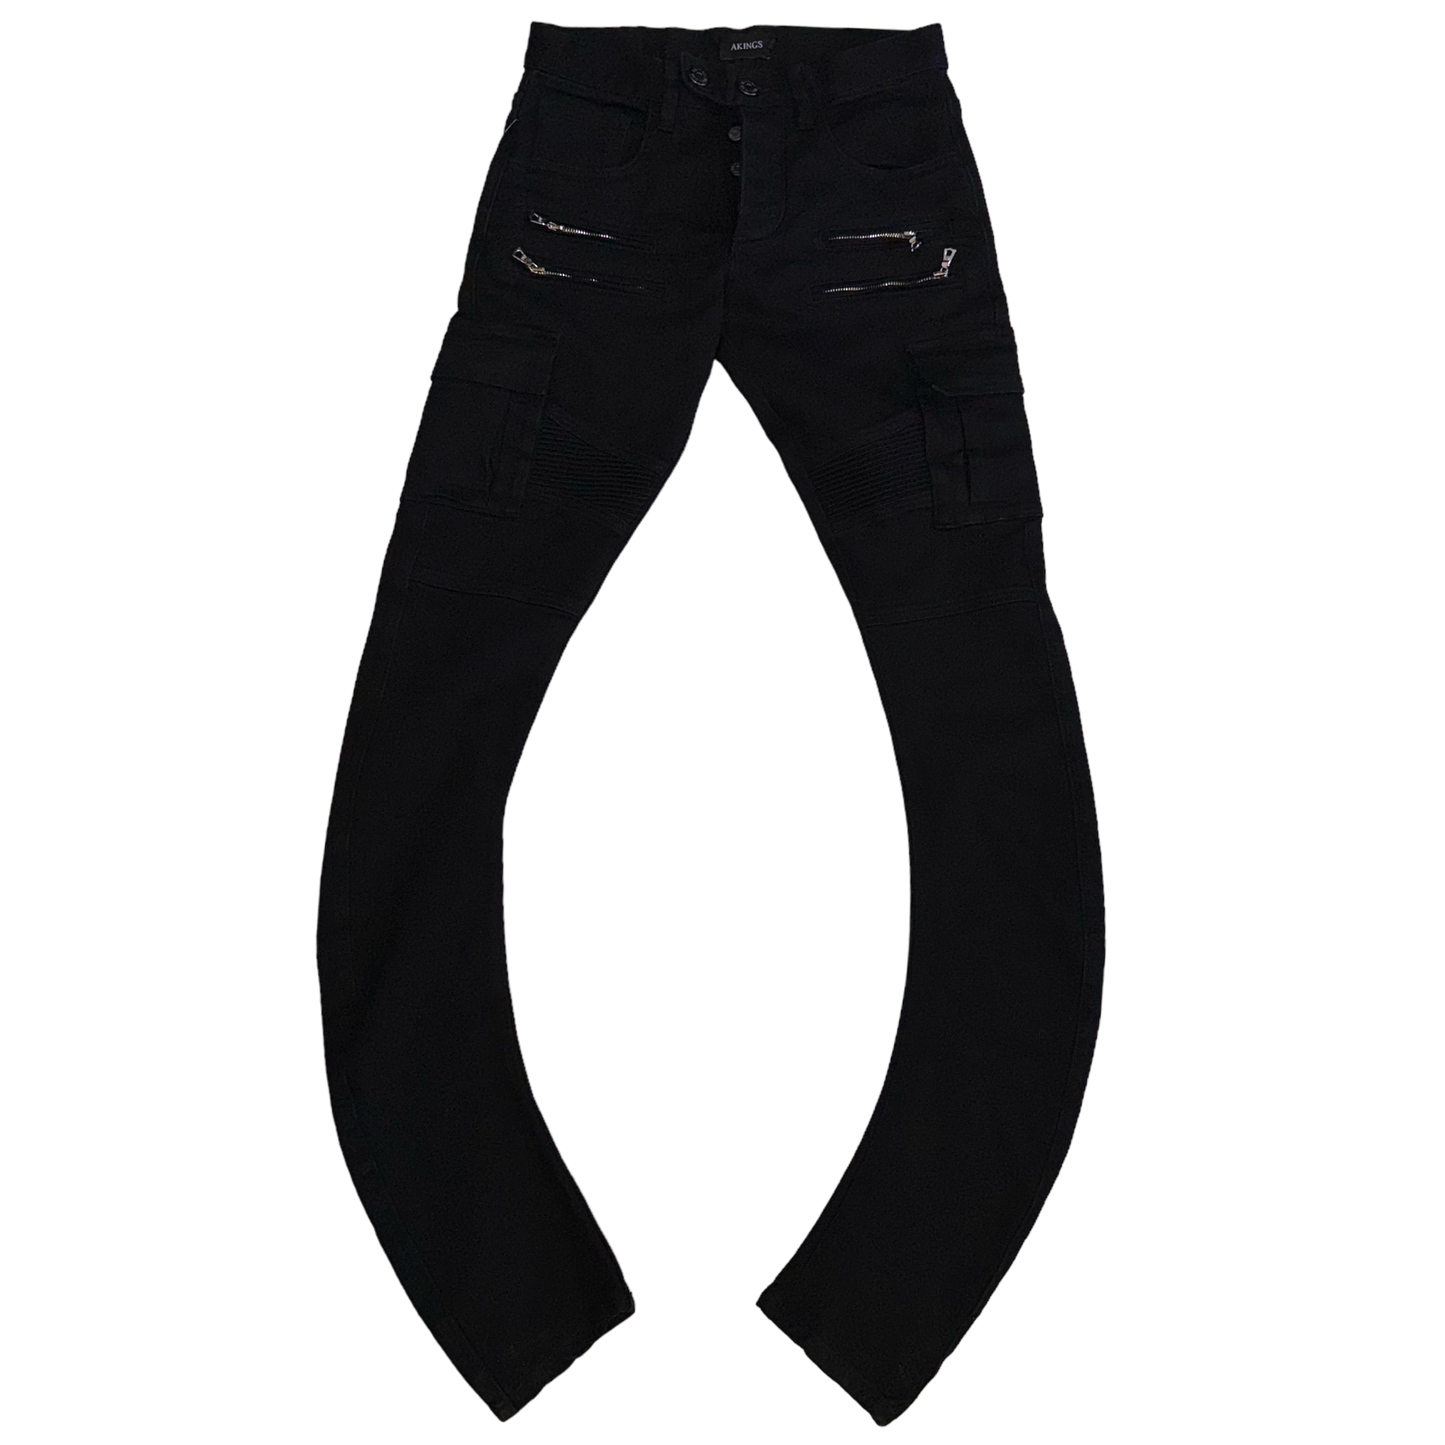 Alan King - AKINGS - Designer Black J Curve Denim Jeans